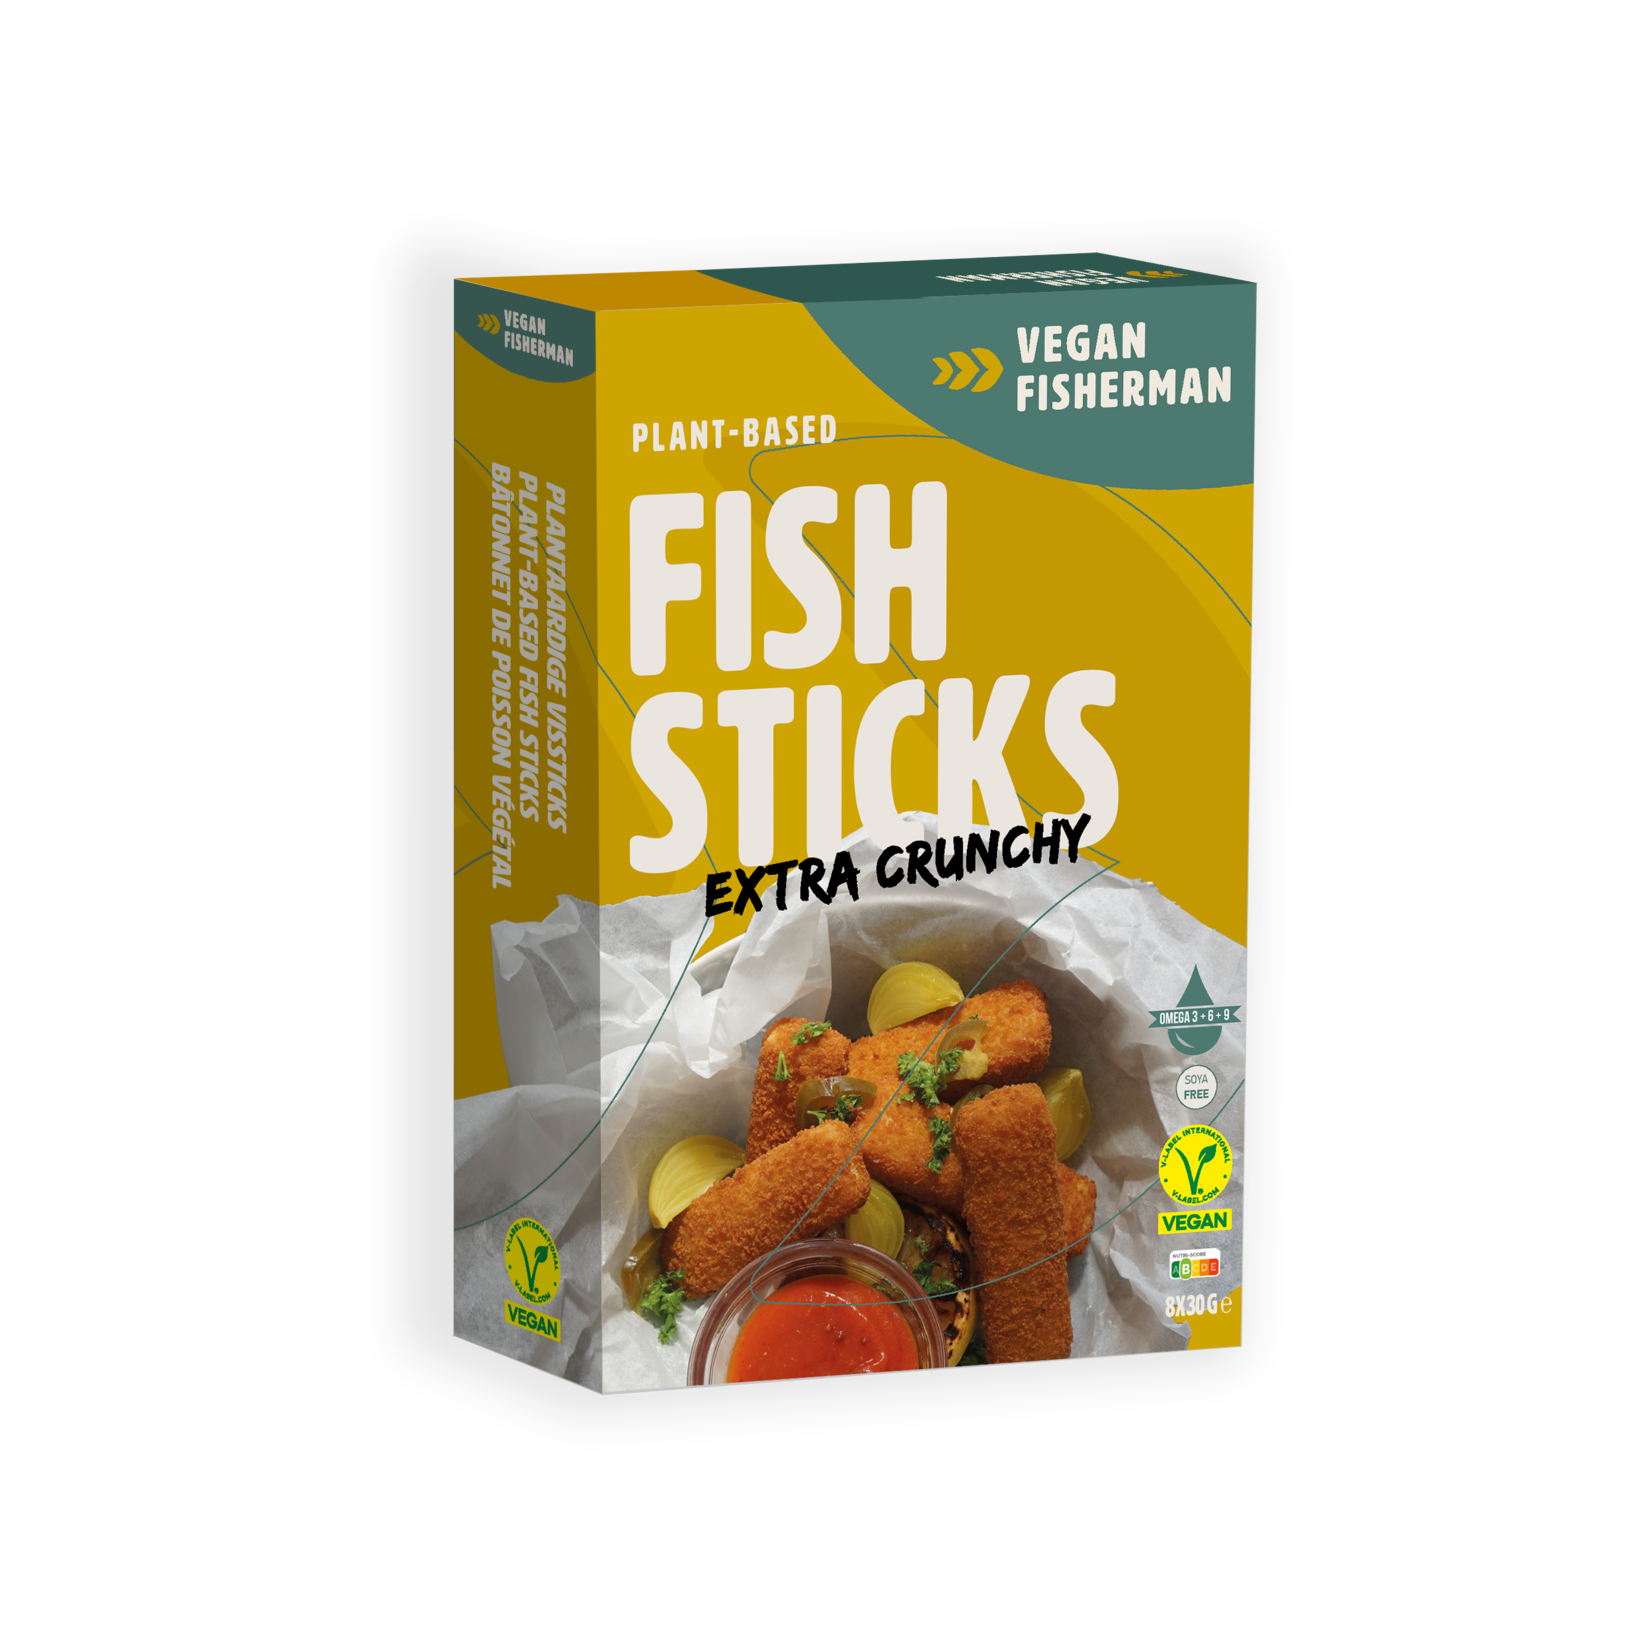 Vegan Visboer - Vegan Fisherman Proefpakket: Filet, Visstick, Kibbeling, Garnaal.